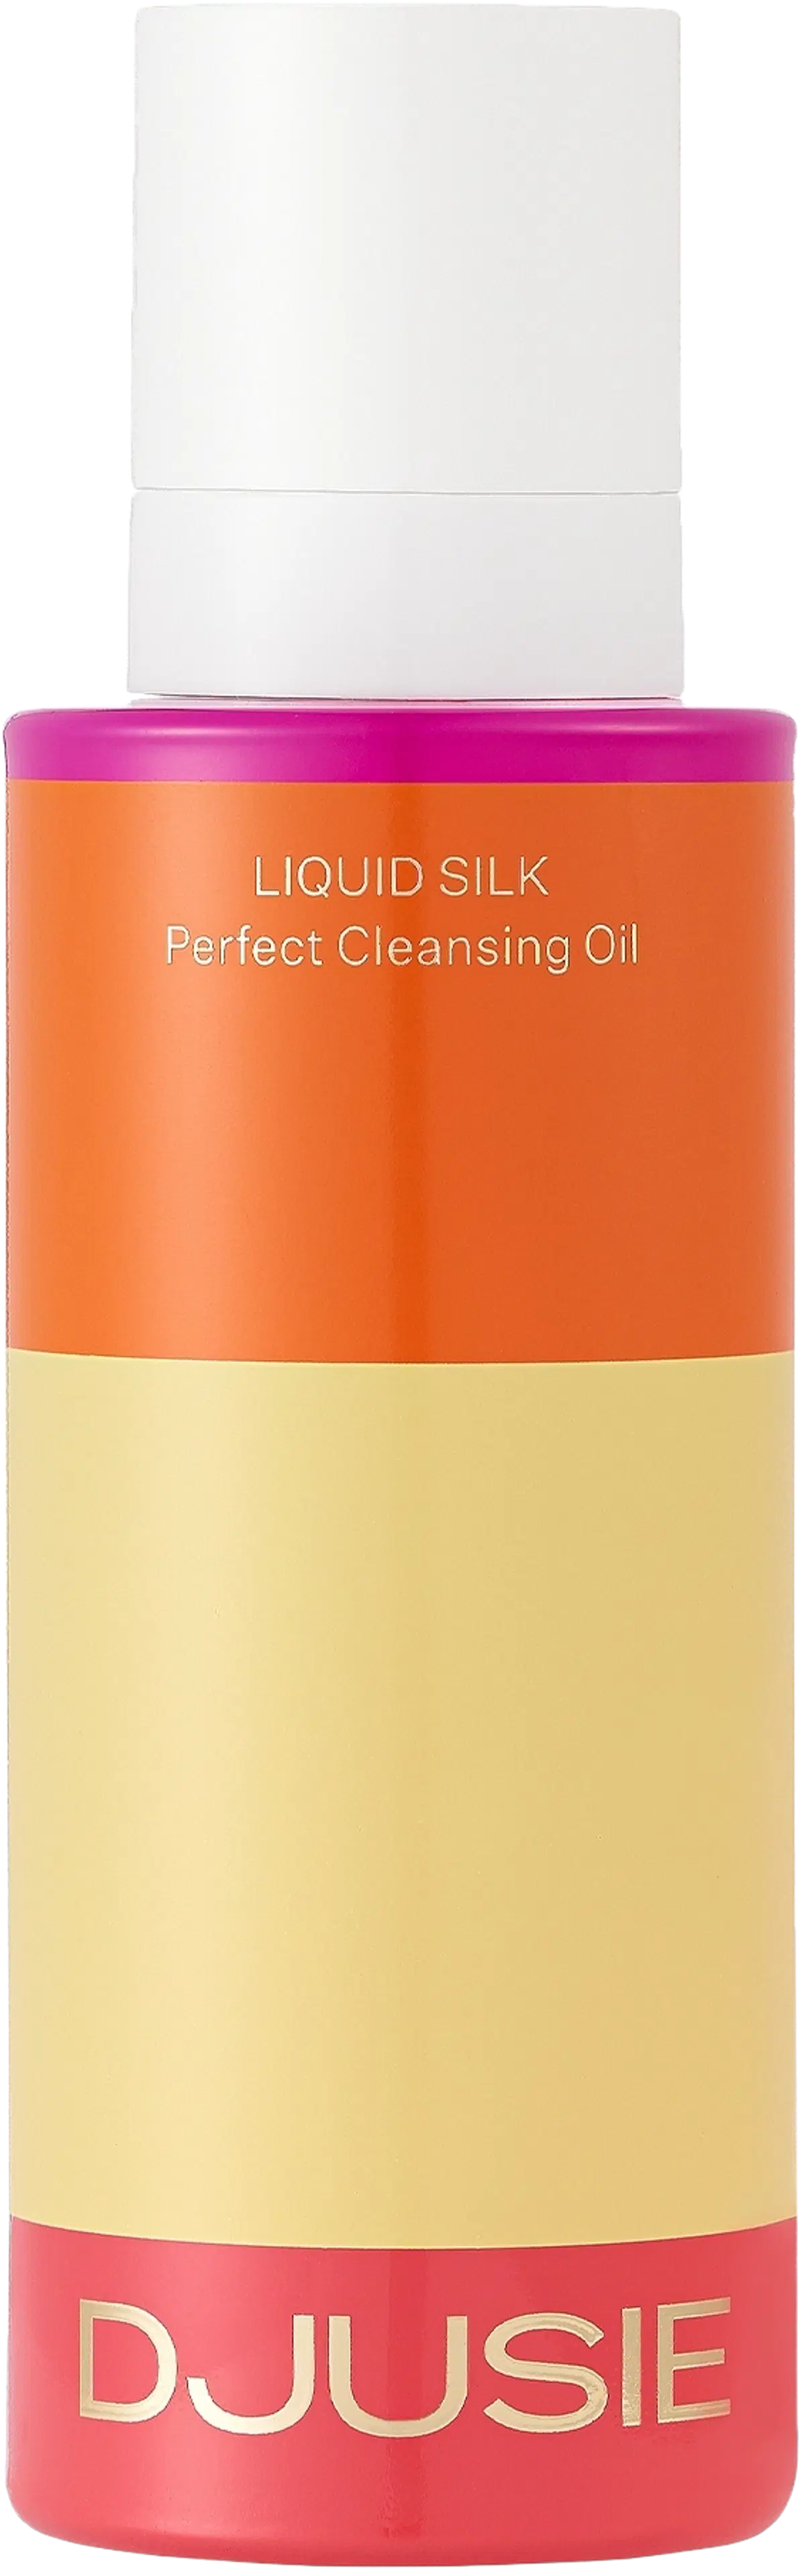 Djusie Liquid Silk Perfect Cleansing Oil Puhdistusöljy 100 ml